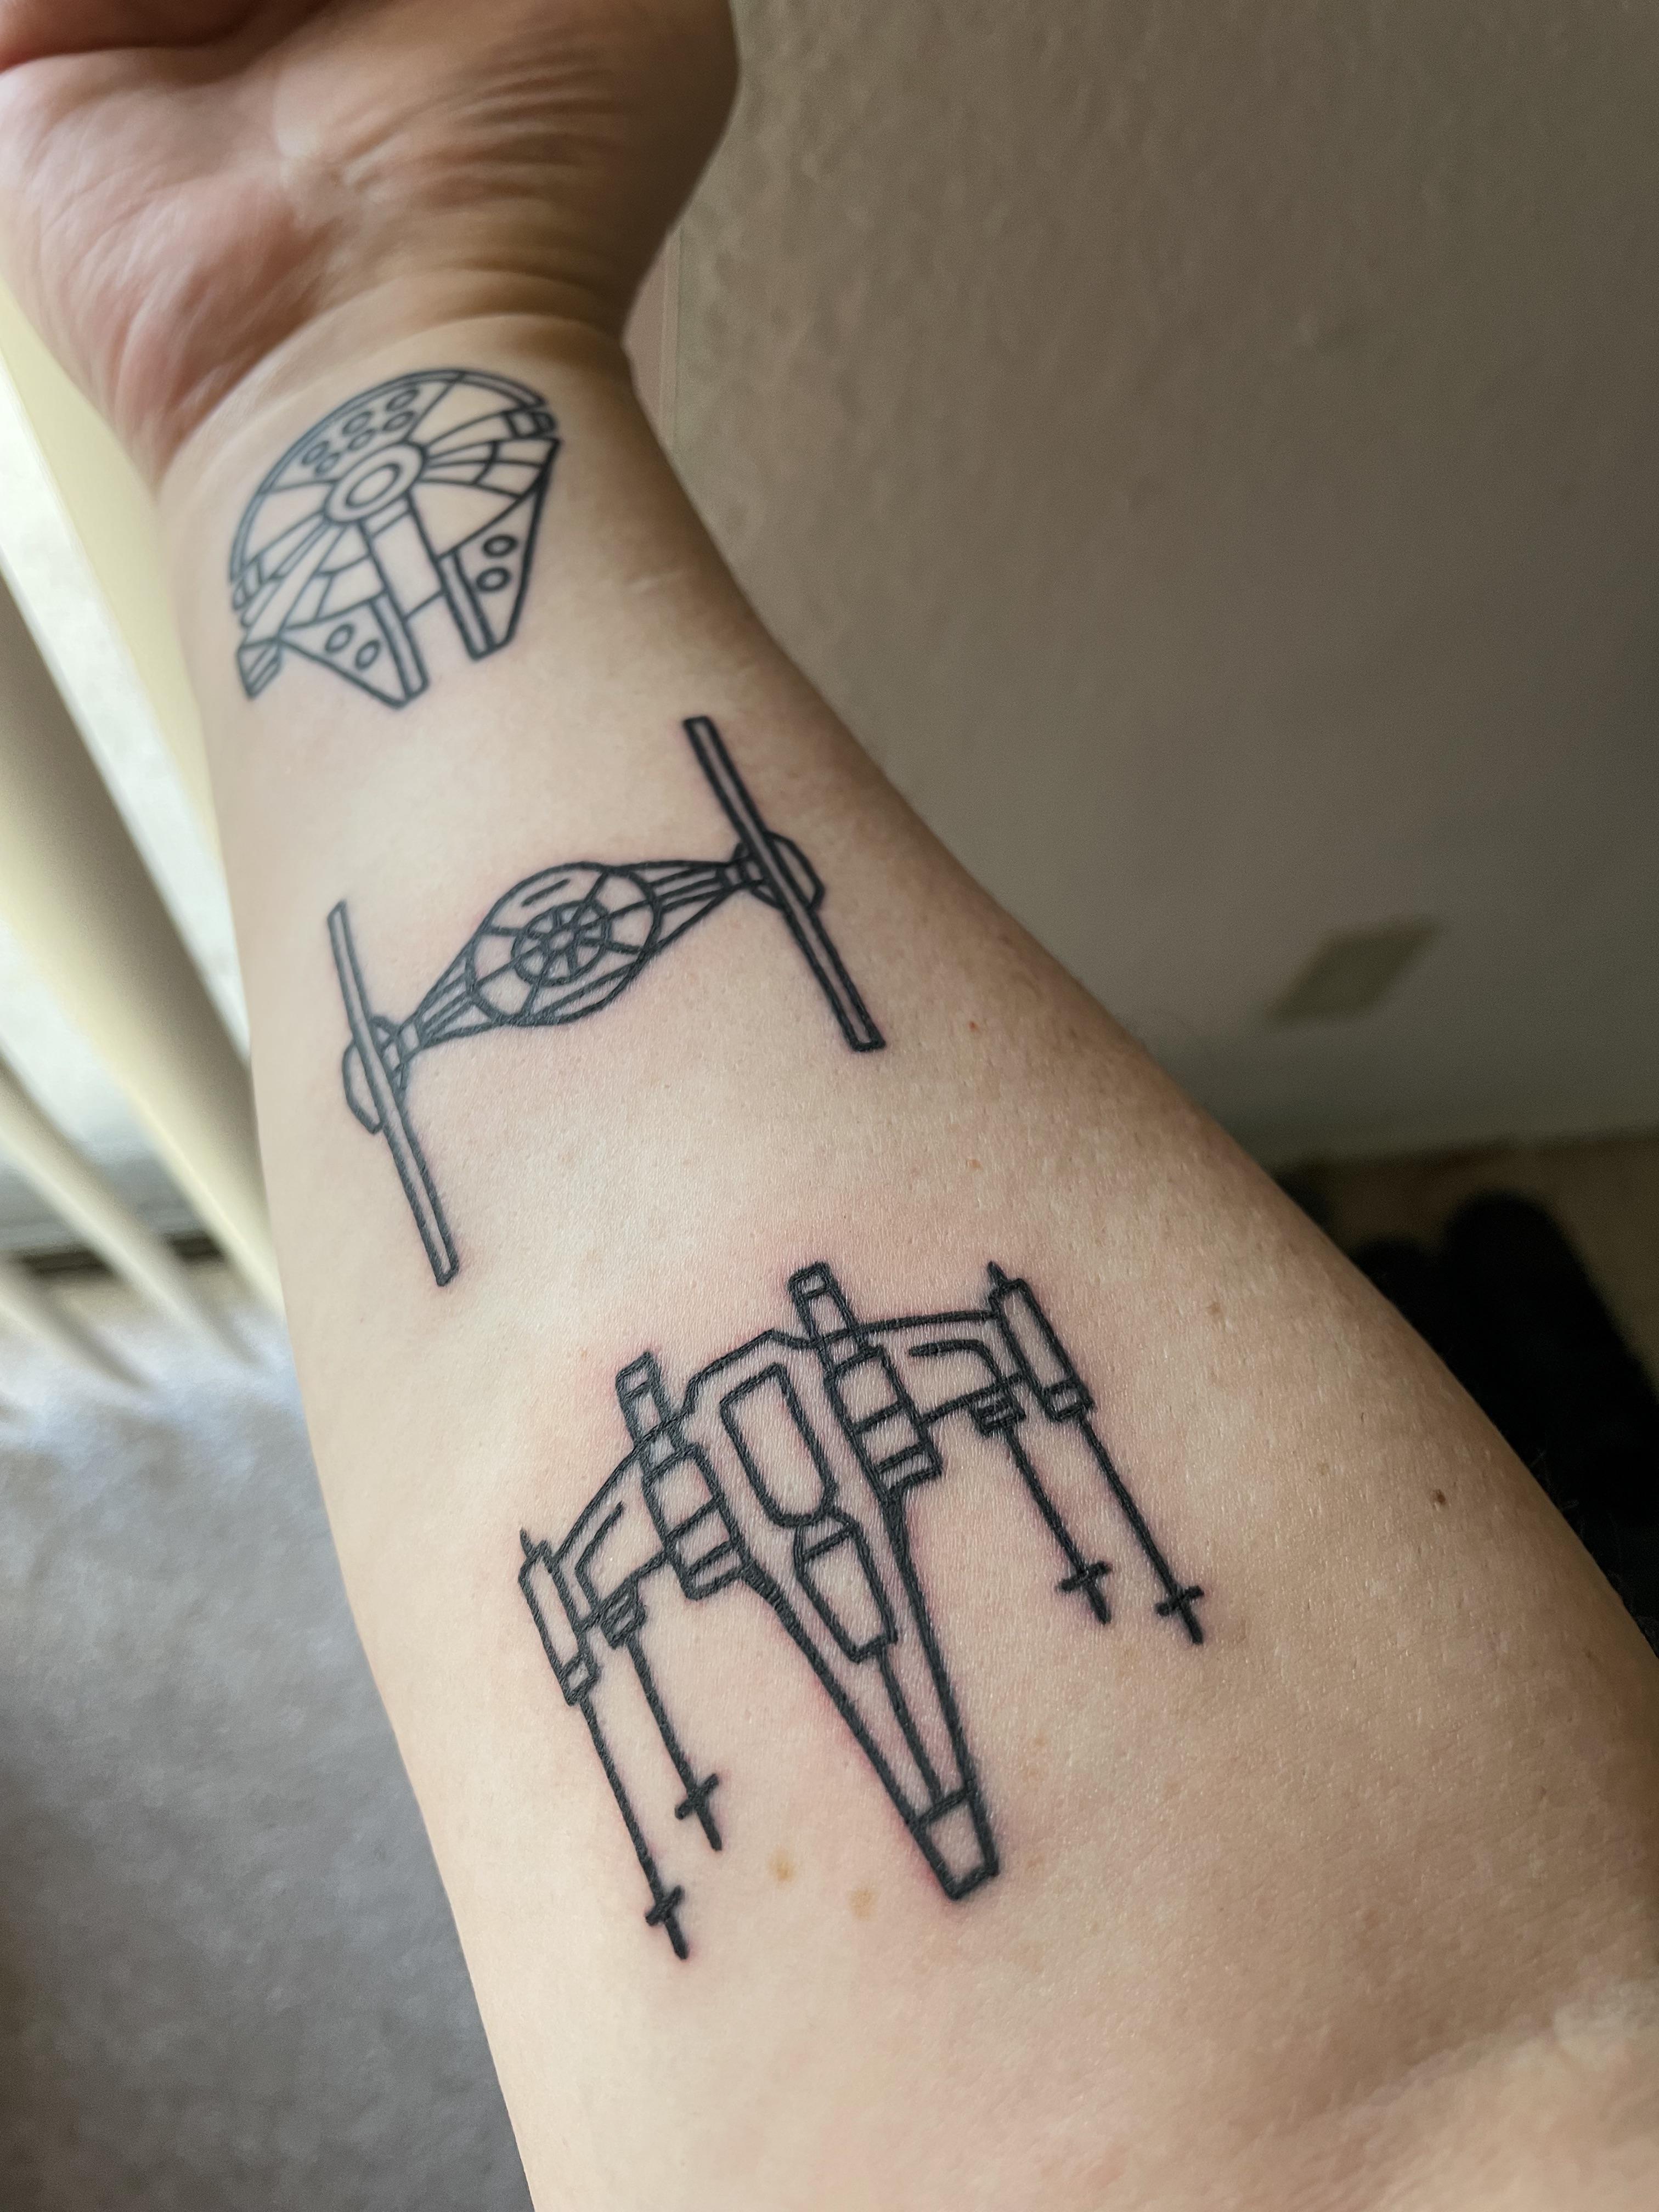 Minimalist Princess Leia tattoo on the forearm